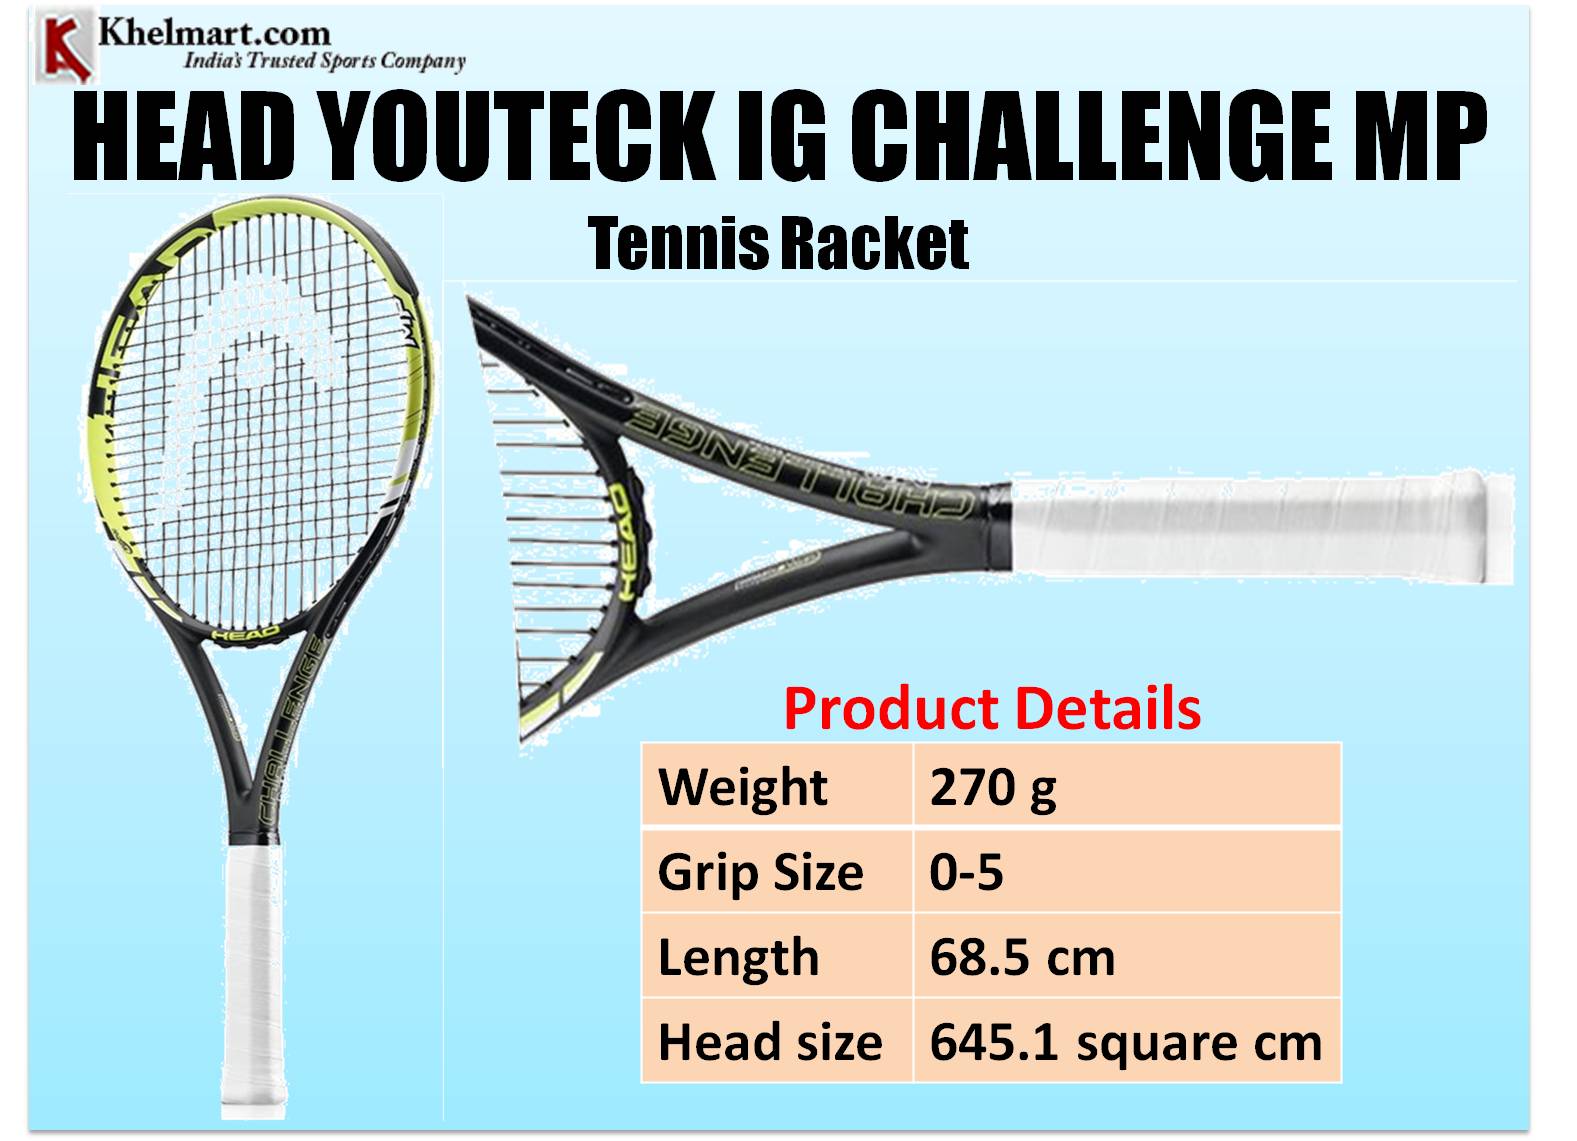 HEAD_YOUTECK_IG_CHALLENGE_MP_Tennis_Racket.jpg